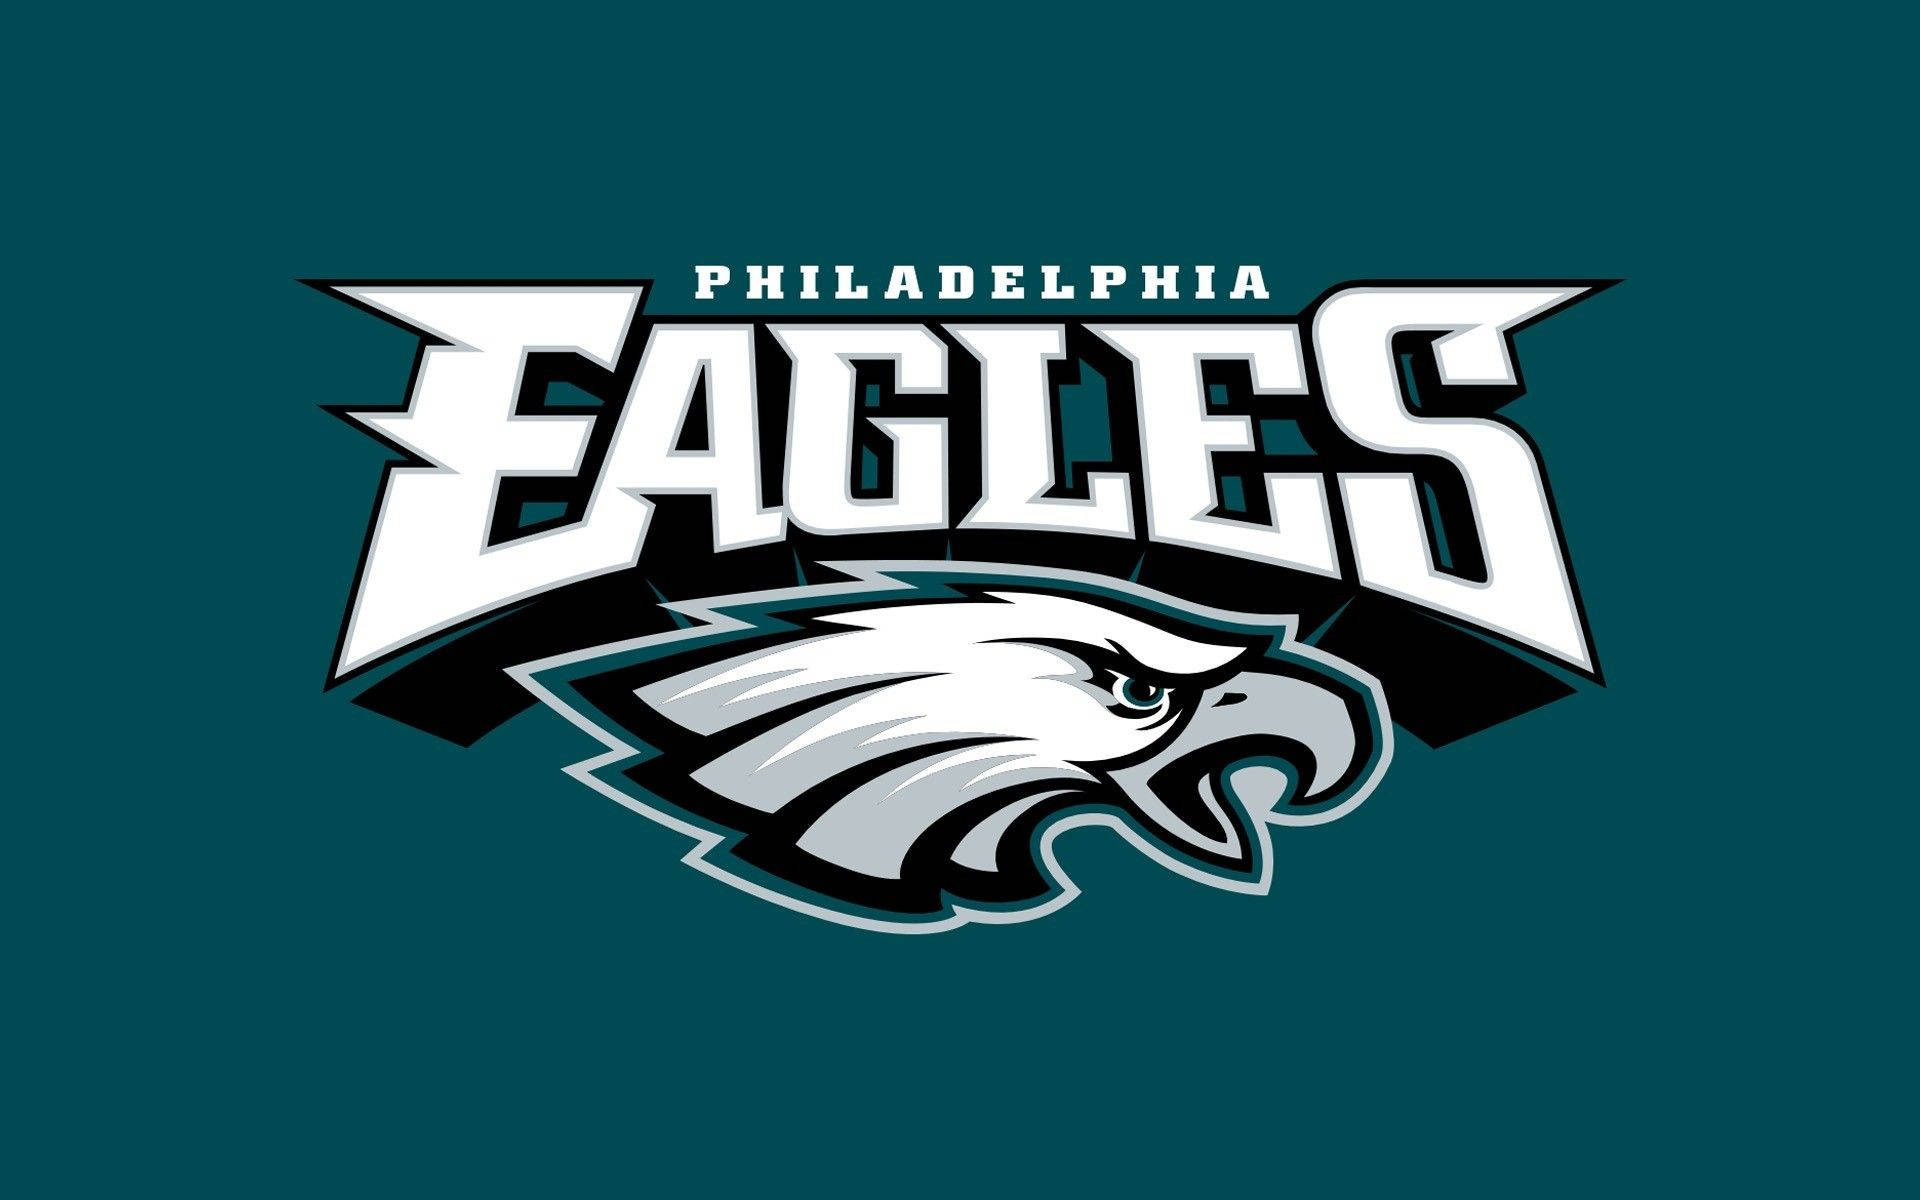 Philadelphia Eagles In Green Background Background